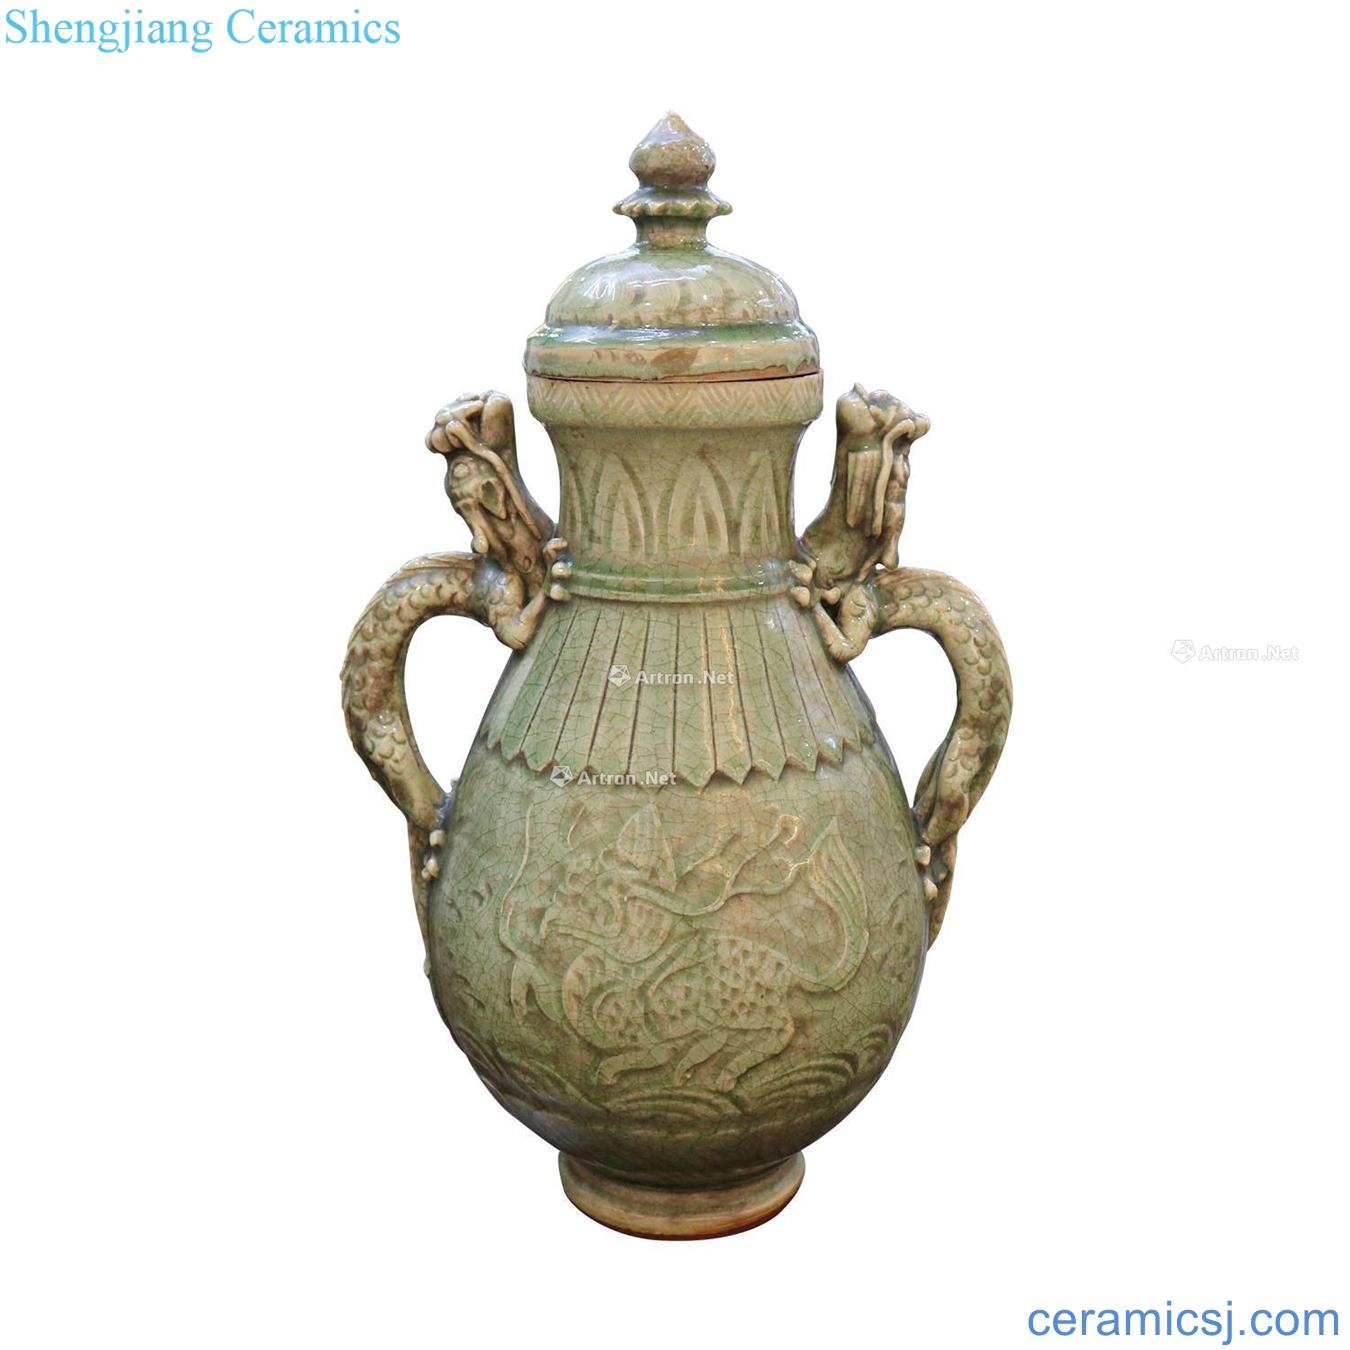 The song dynasty Longquan celadon ears take vase